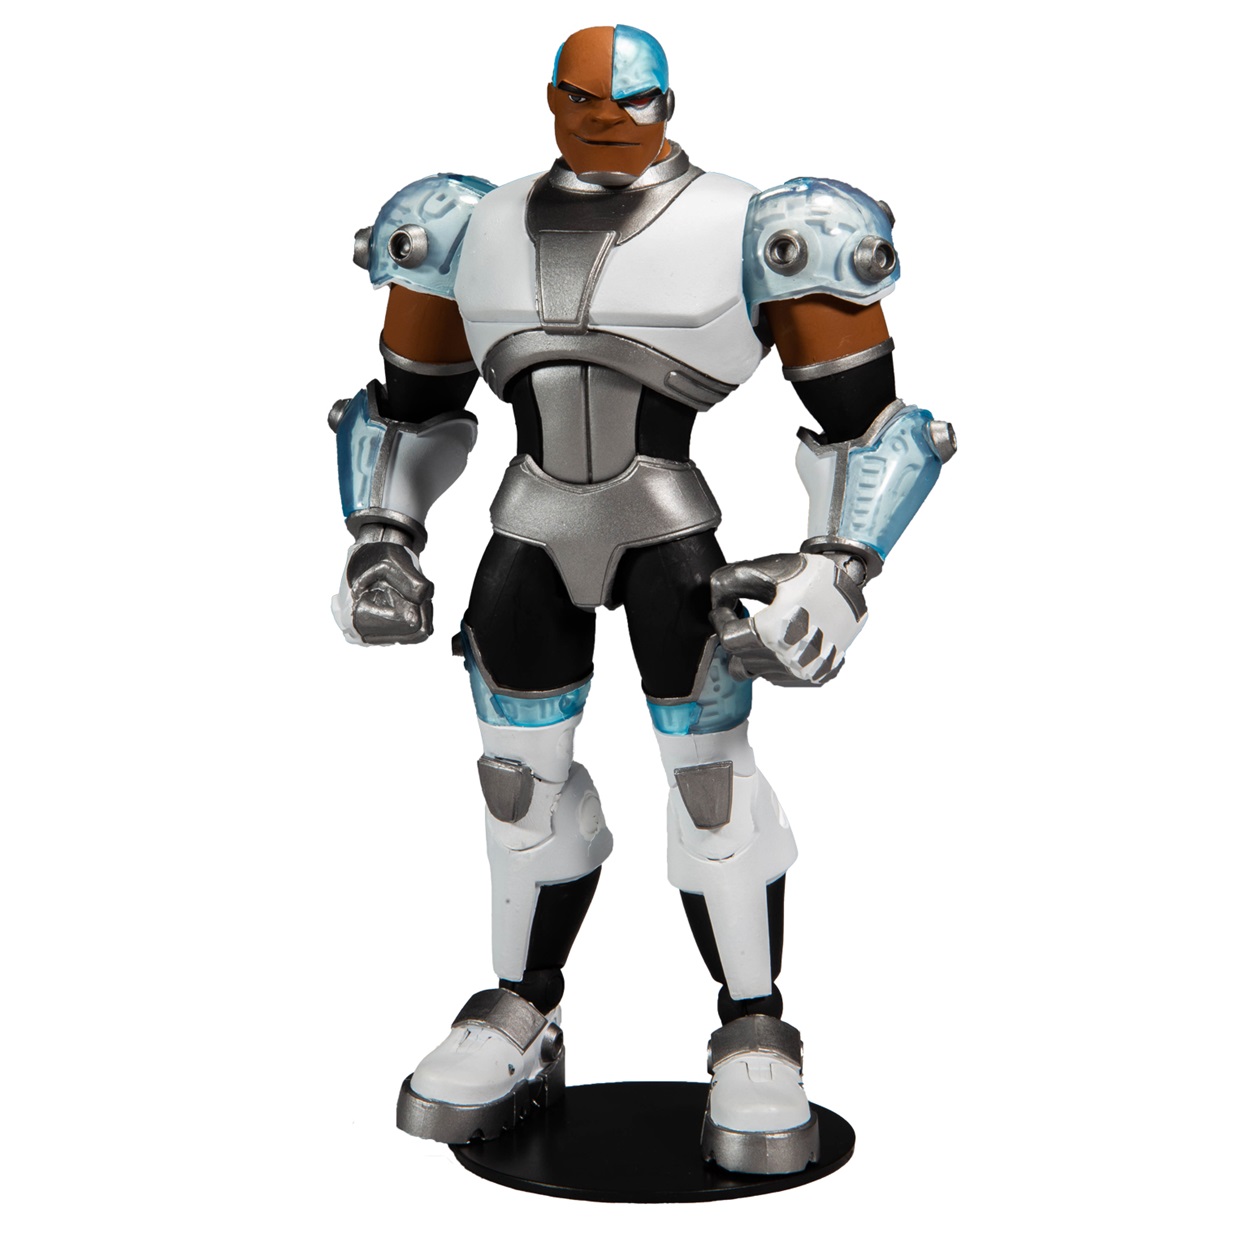 Cyborg Figura Teen Titans Multiverse Mc Farlane Toys 6 PuLG